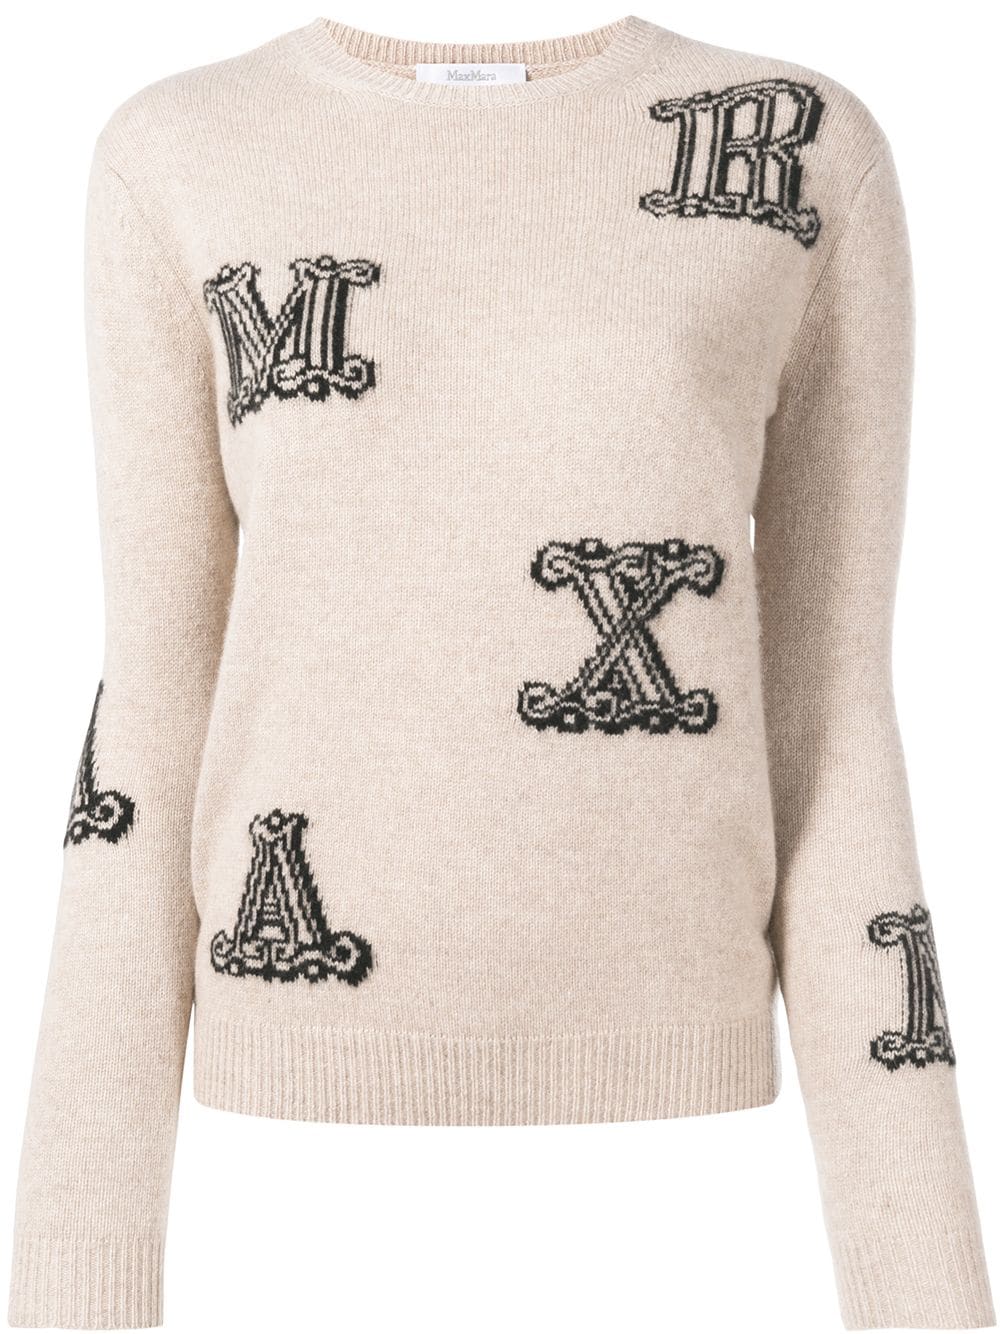 Max Mara Logo - Max Mara Logo Embroidered Sweater